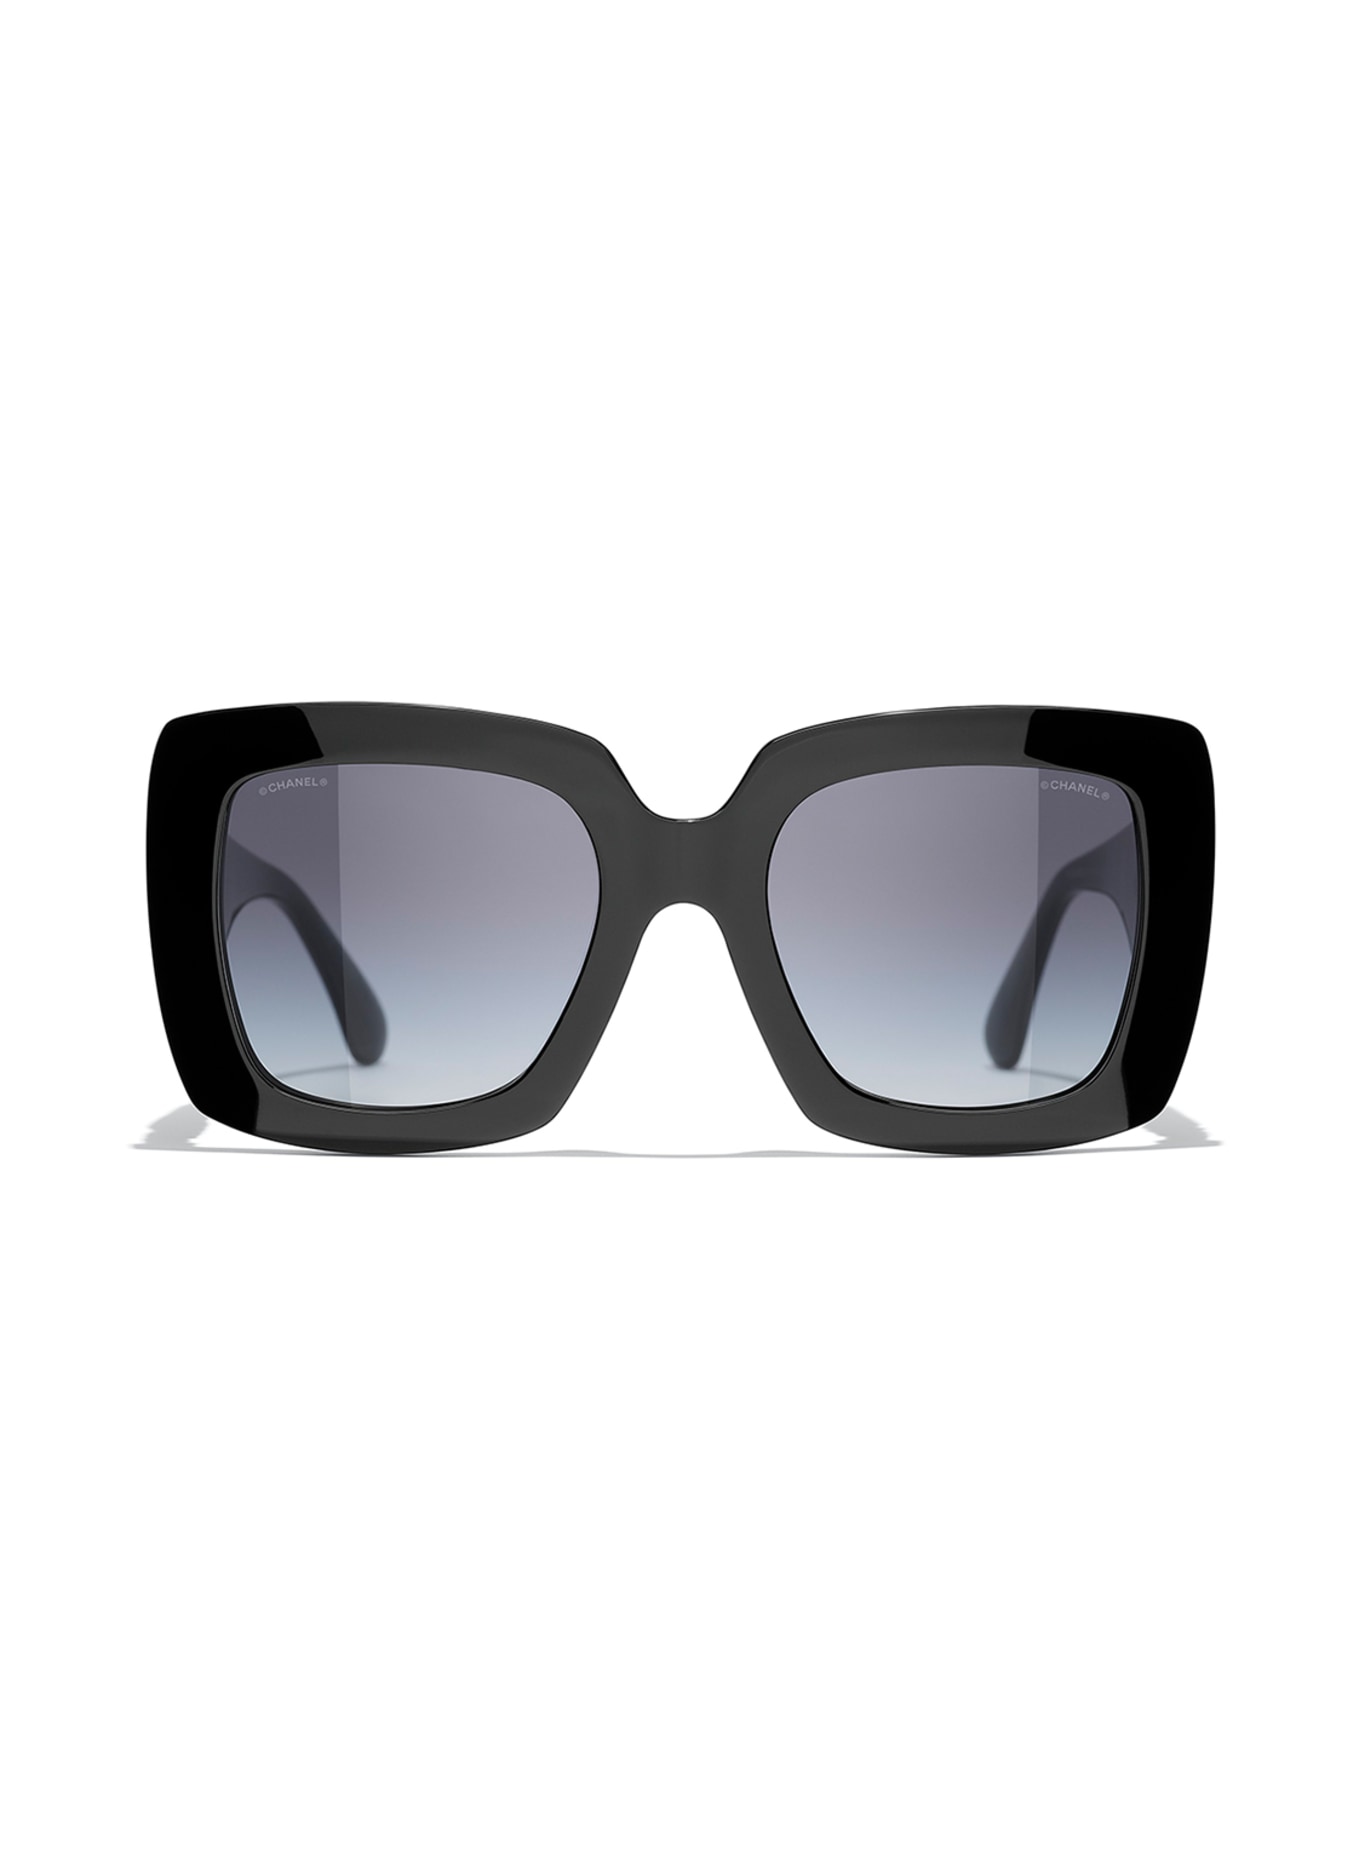 Chanel  Black Oversized Sunglasses  VSP Consignment